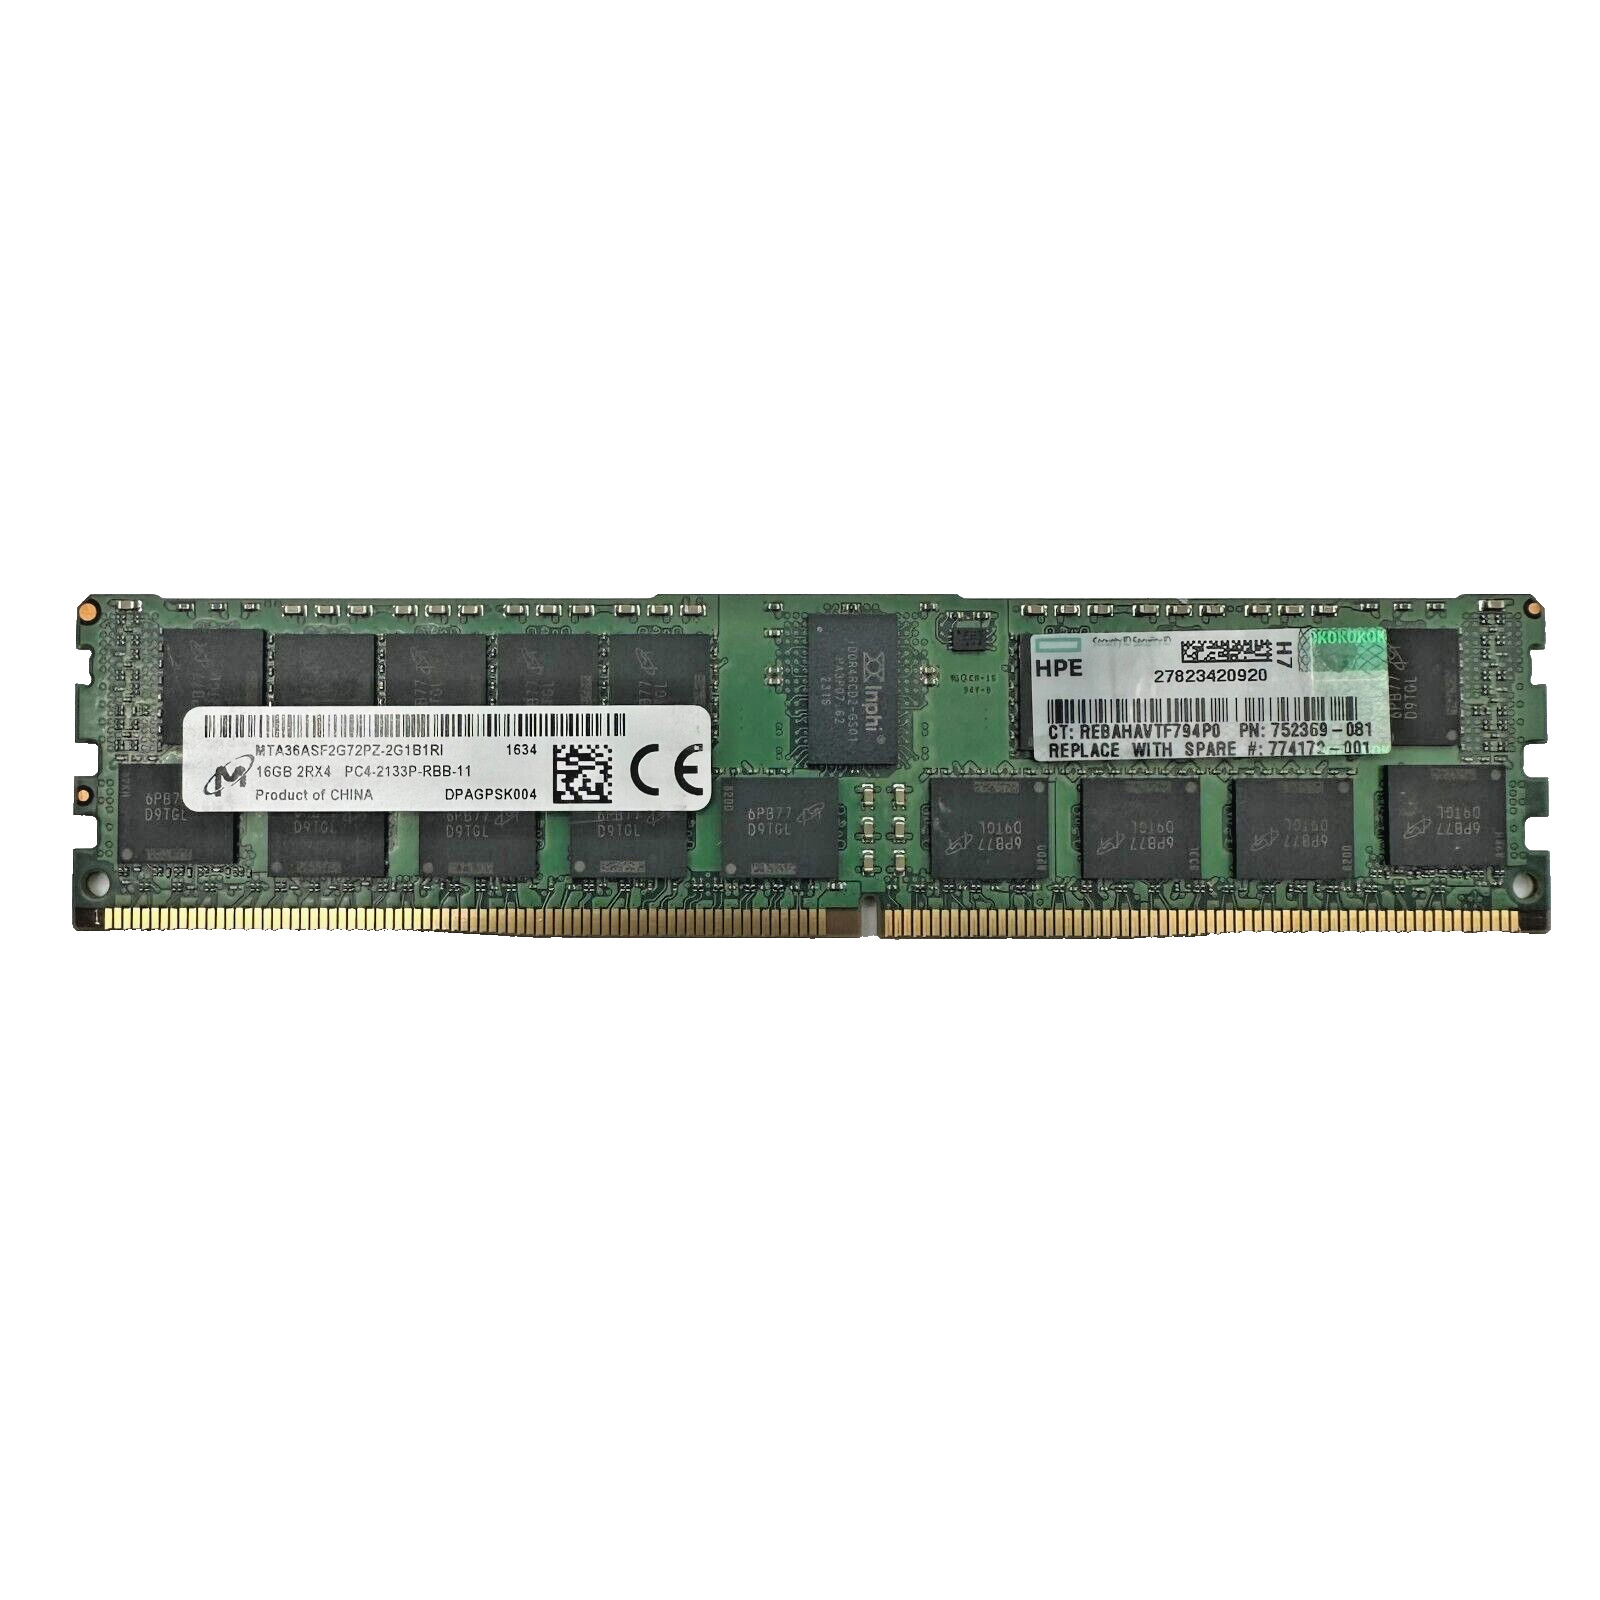 Micron 16GB 1X16GB RAM PC4-17000 DDR4-2133P SERVER SDRAM MTA36ASF2G72PZ-2G1B1RI